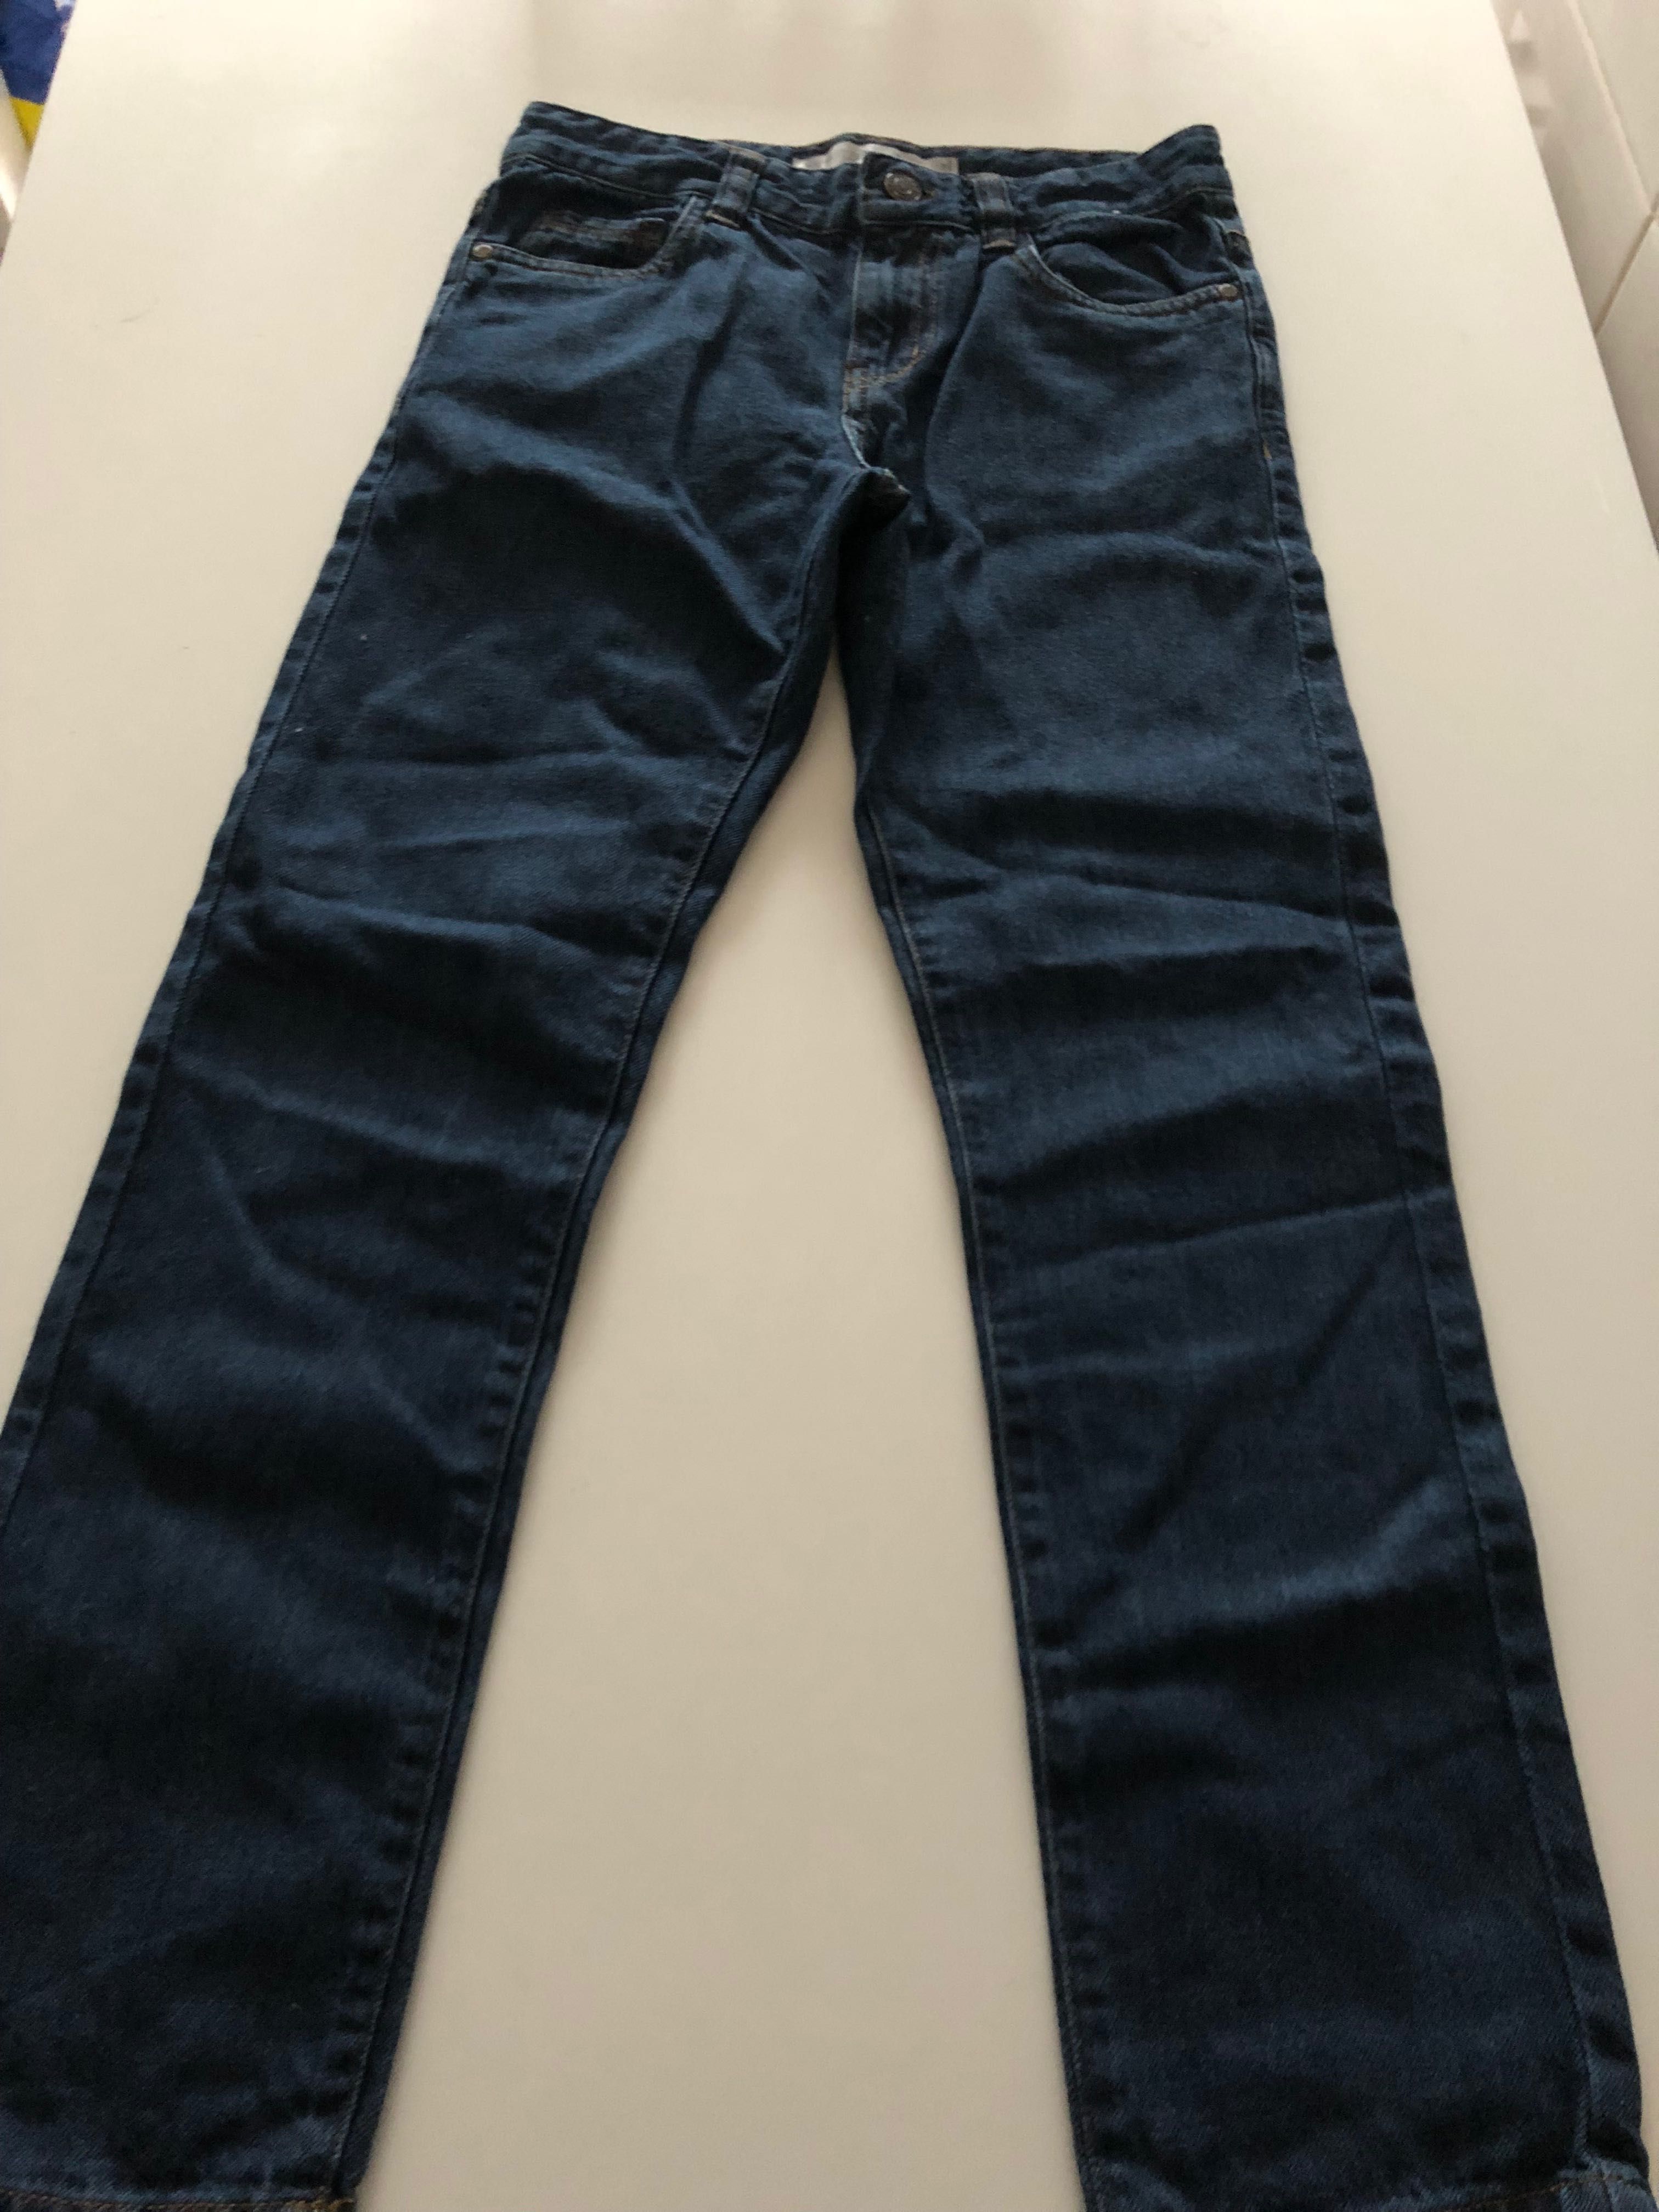 Novo - Jeans - 9/10 anos - Zippy